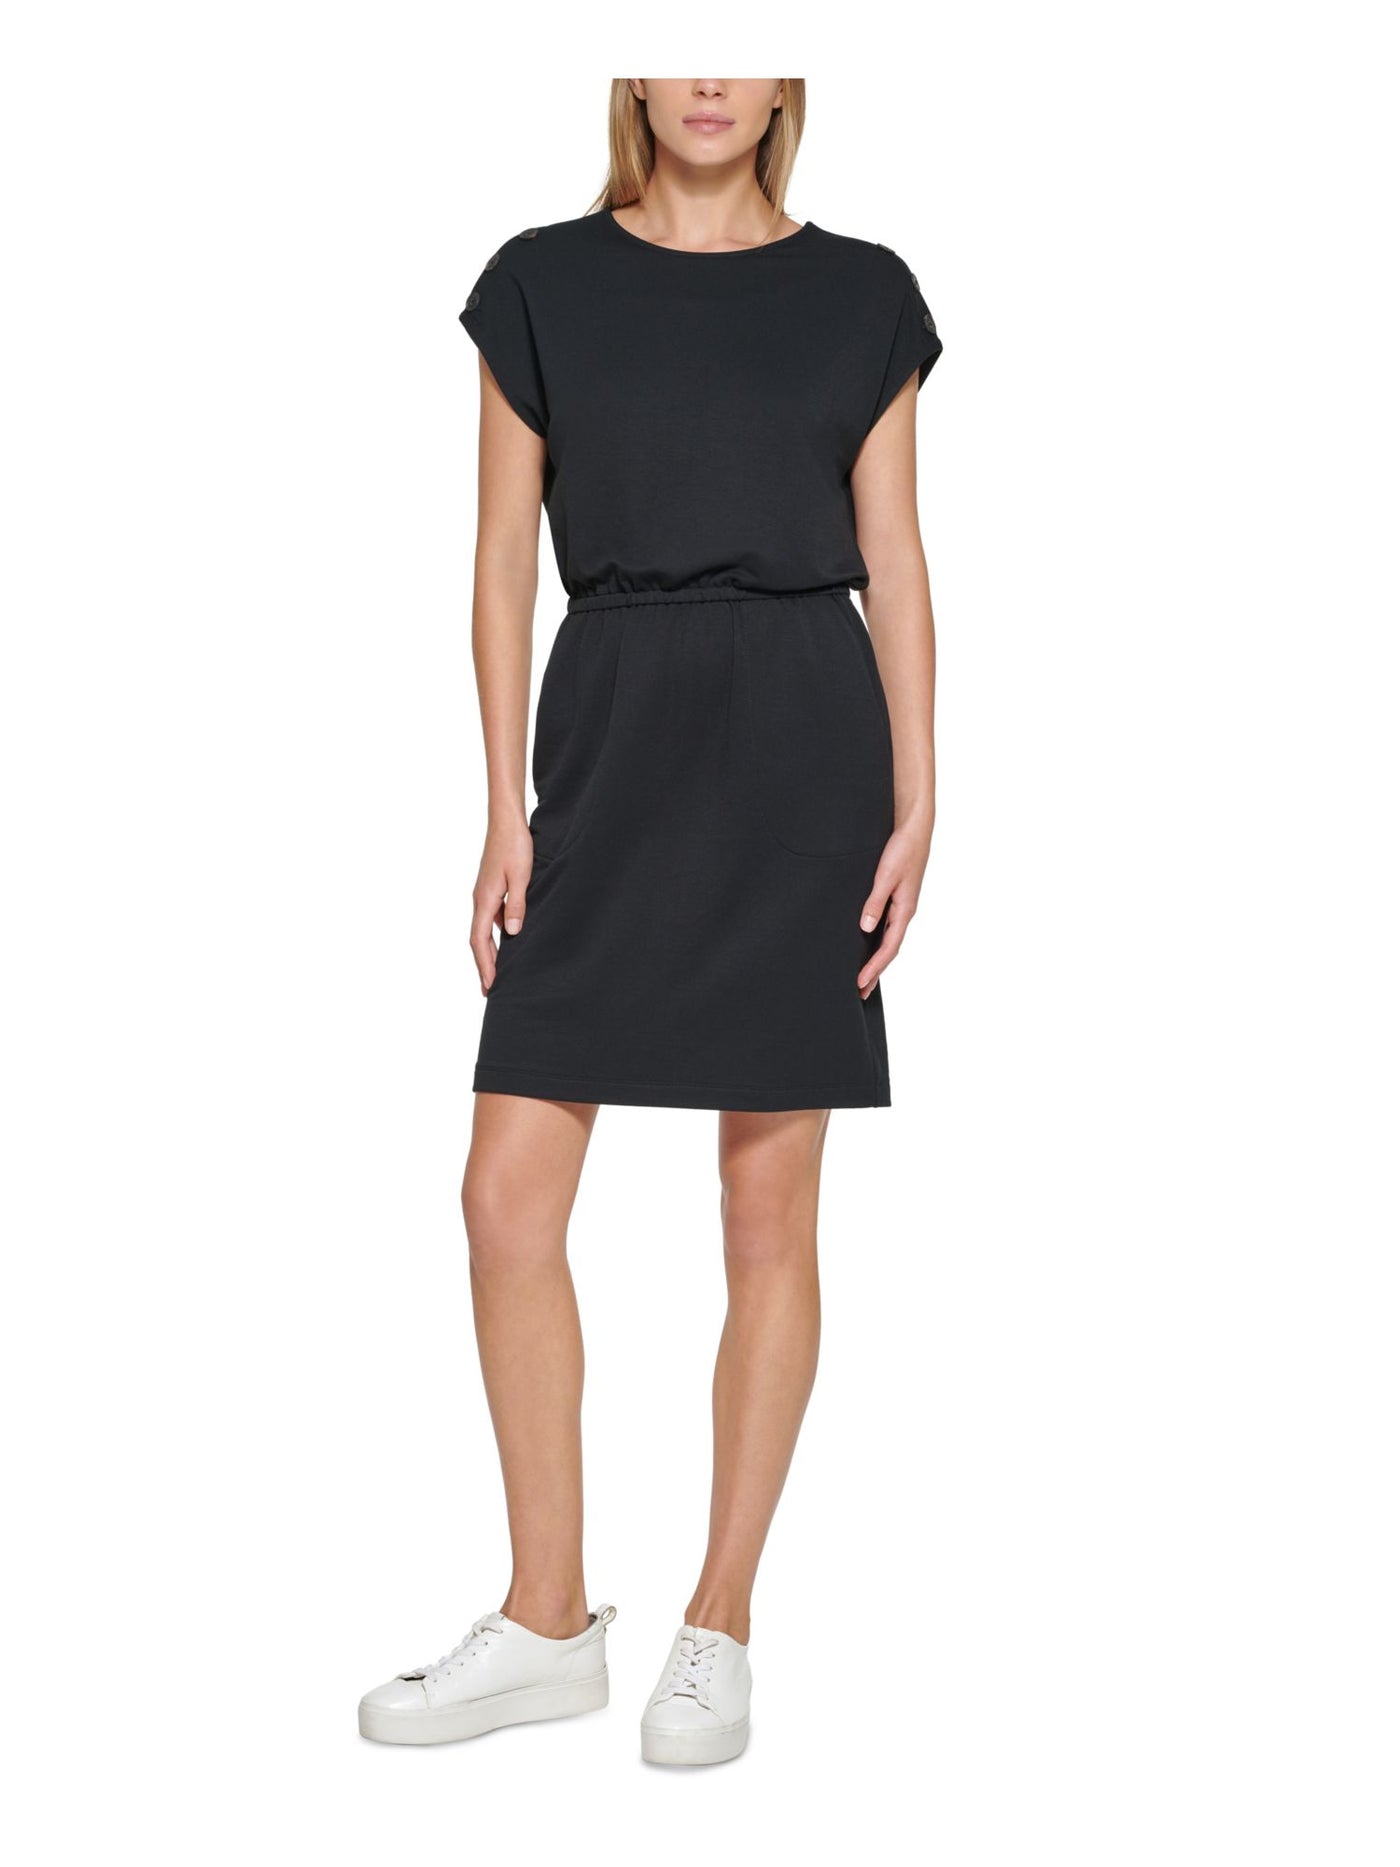 CALVIN KLEIN Womens Black Ruched Tie Pullover Styling Short Sleeve Round Neck Short Sheath Dress L